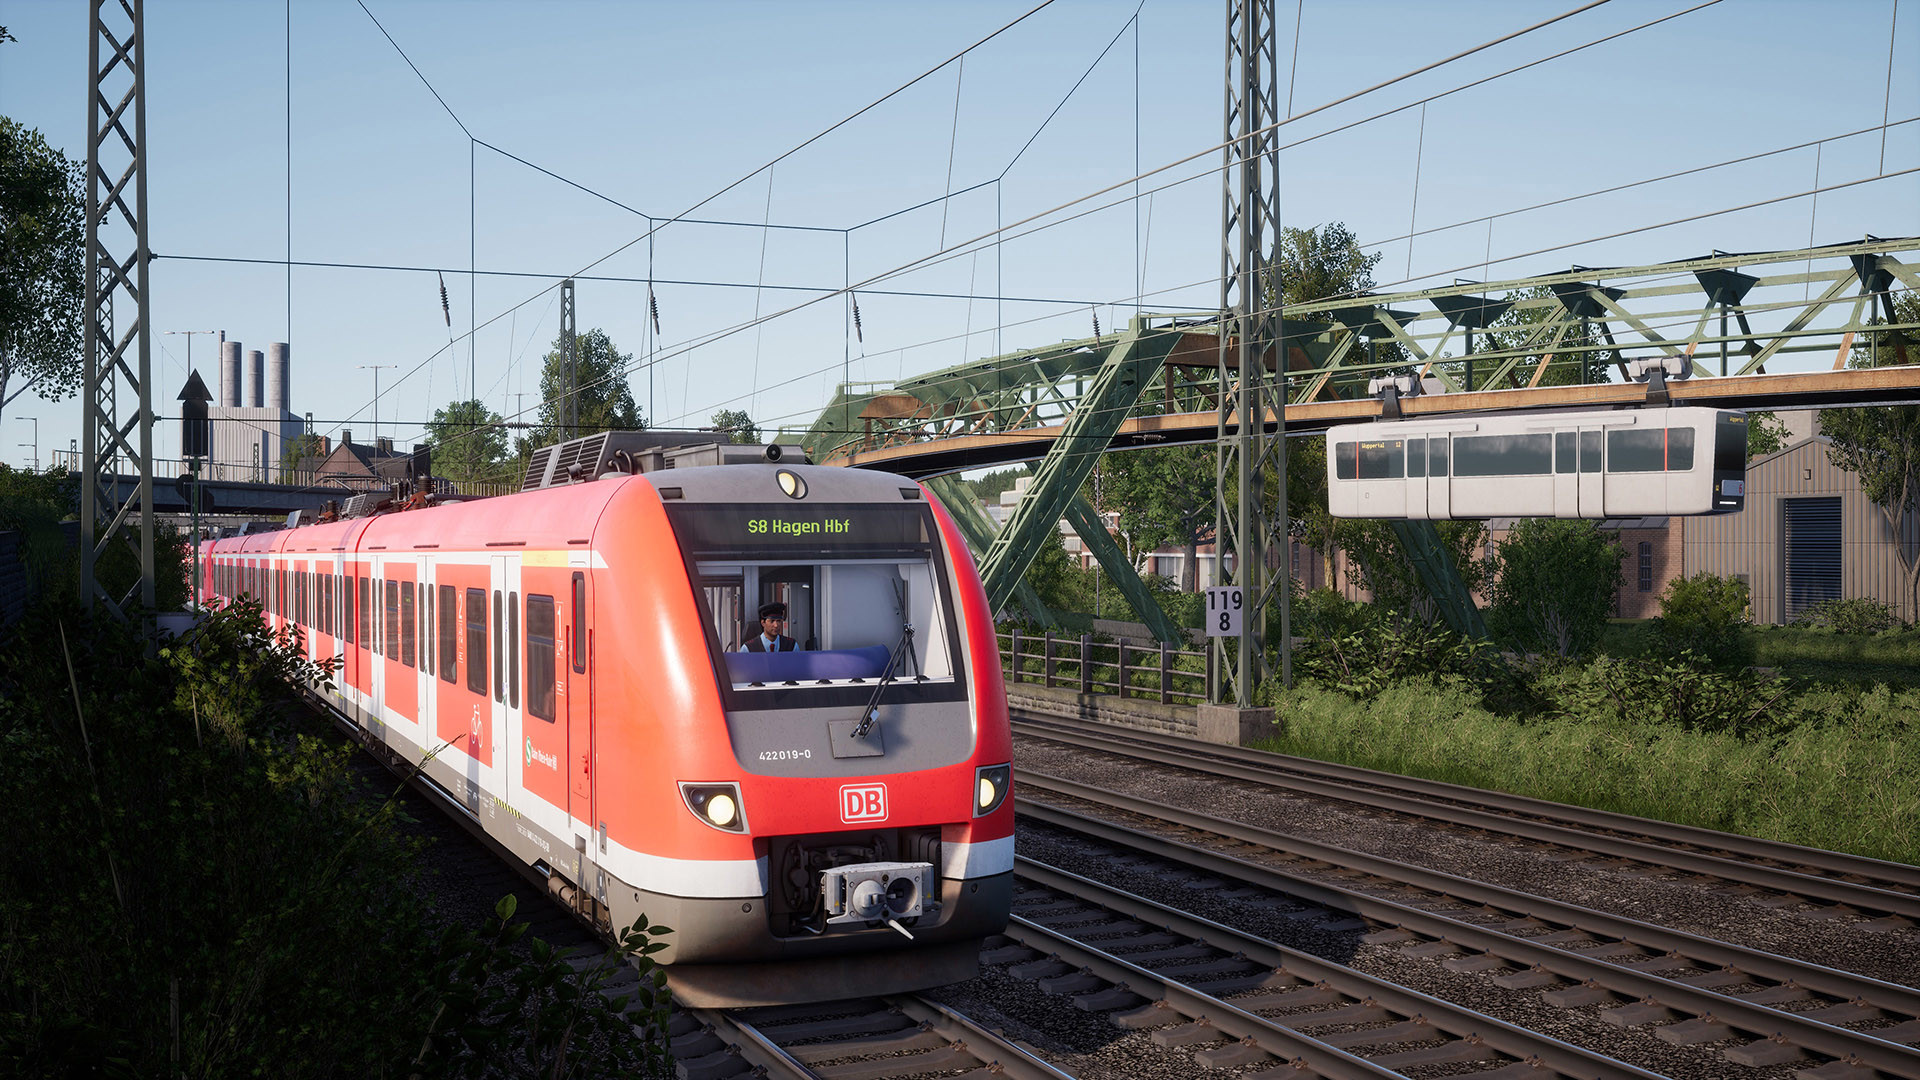 Train Sim World - Rhein-Ruhr Osten: Wuppertal - Hagen Route Add-On DLC Steam CD Key 10.03 usd